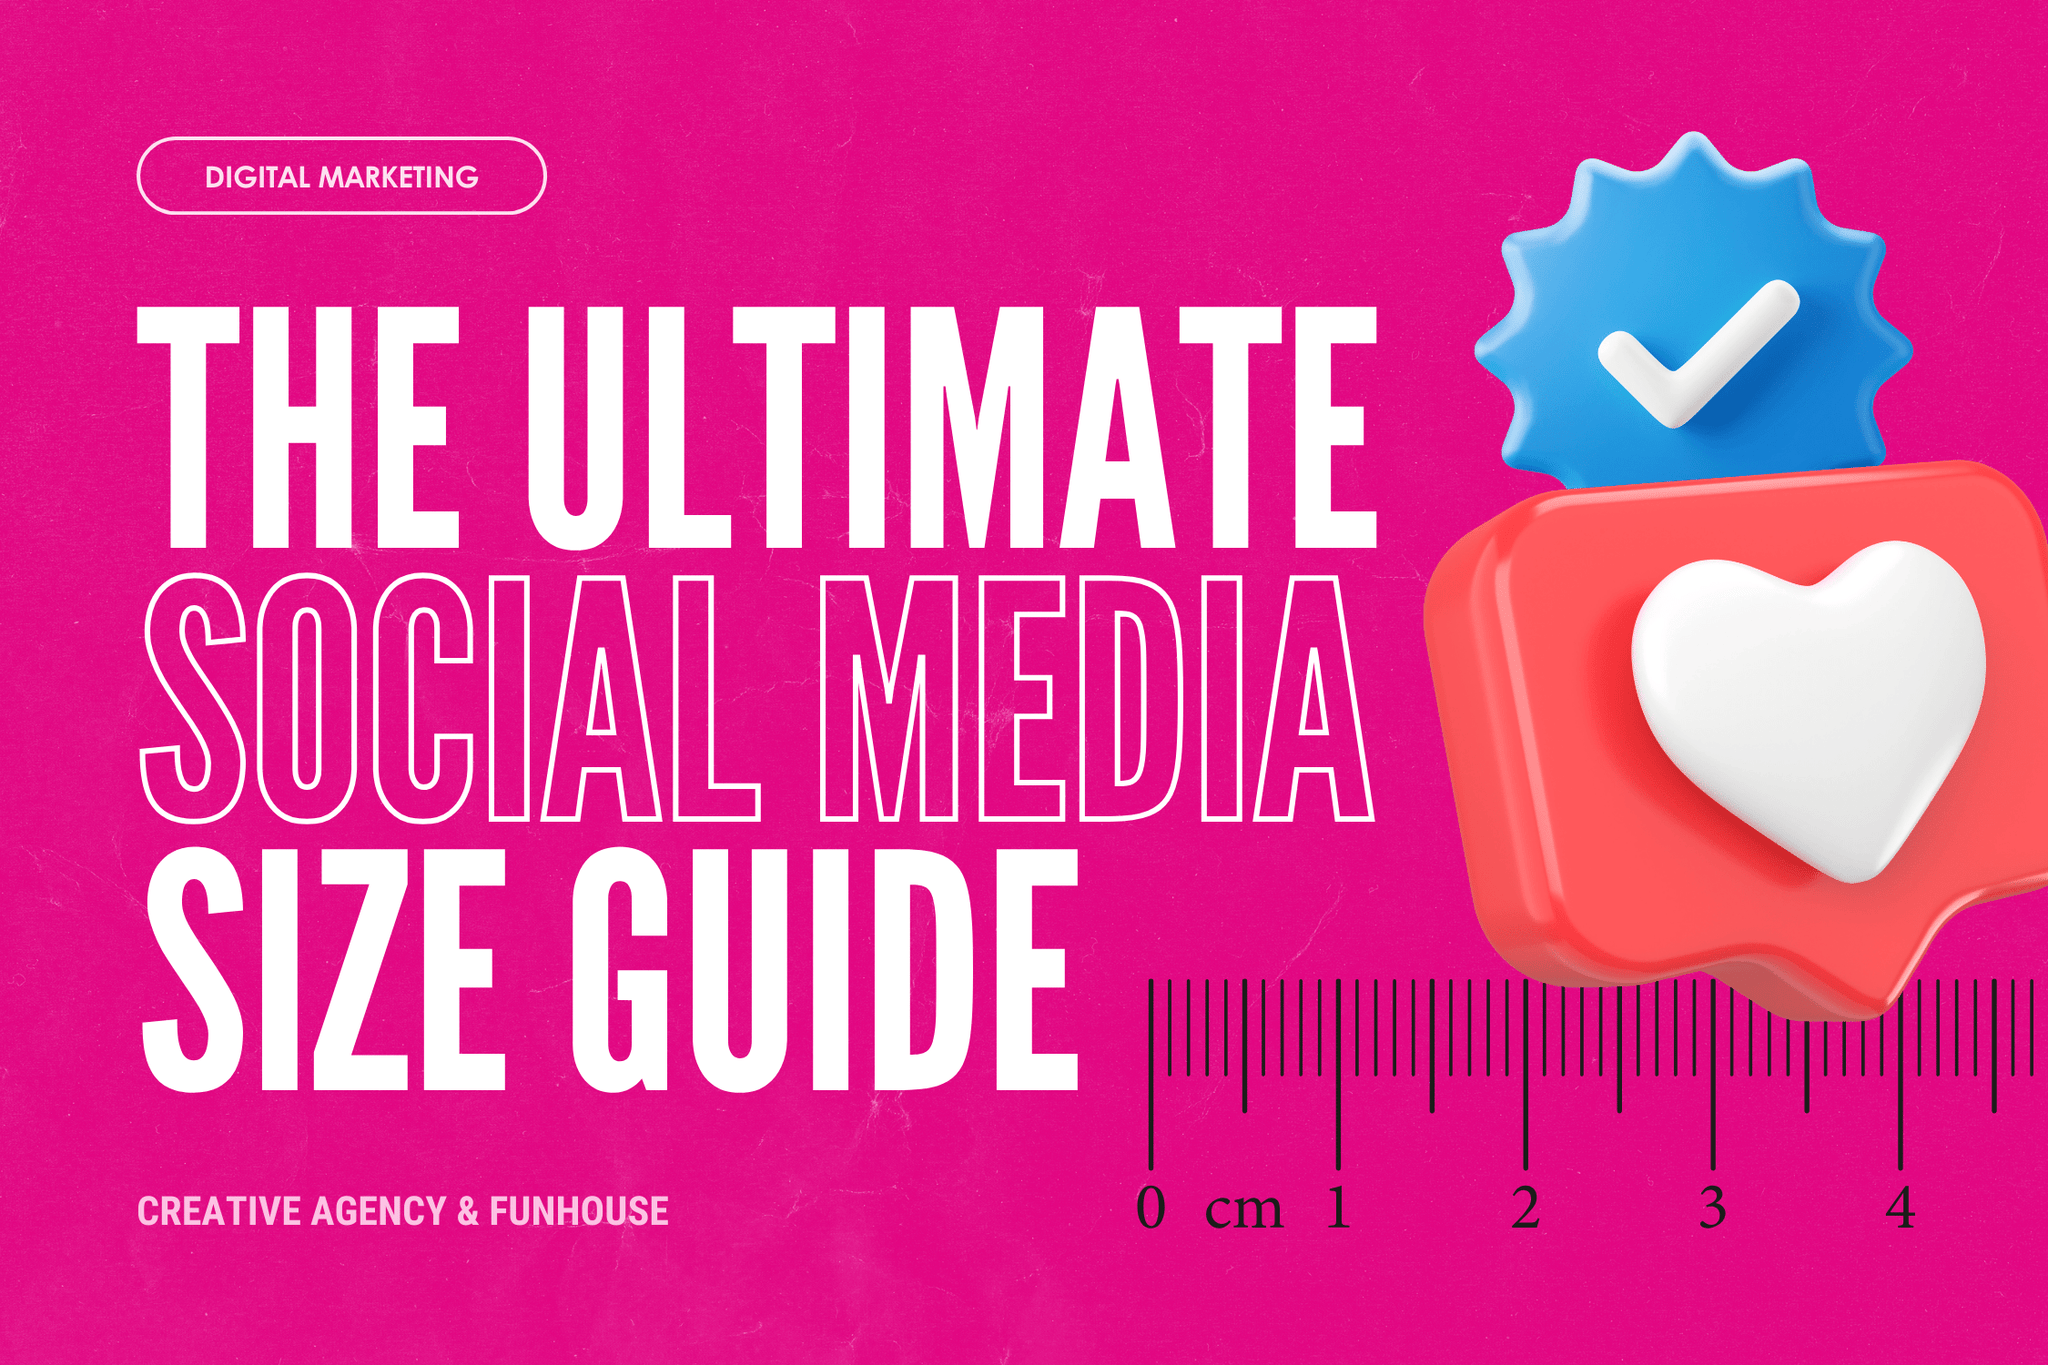 The Ultimate Social Media Size Guide for Instagram